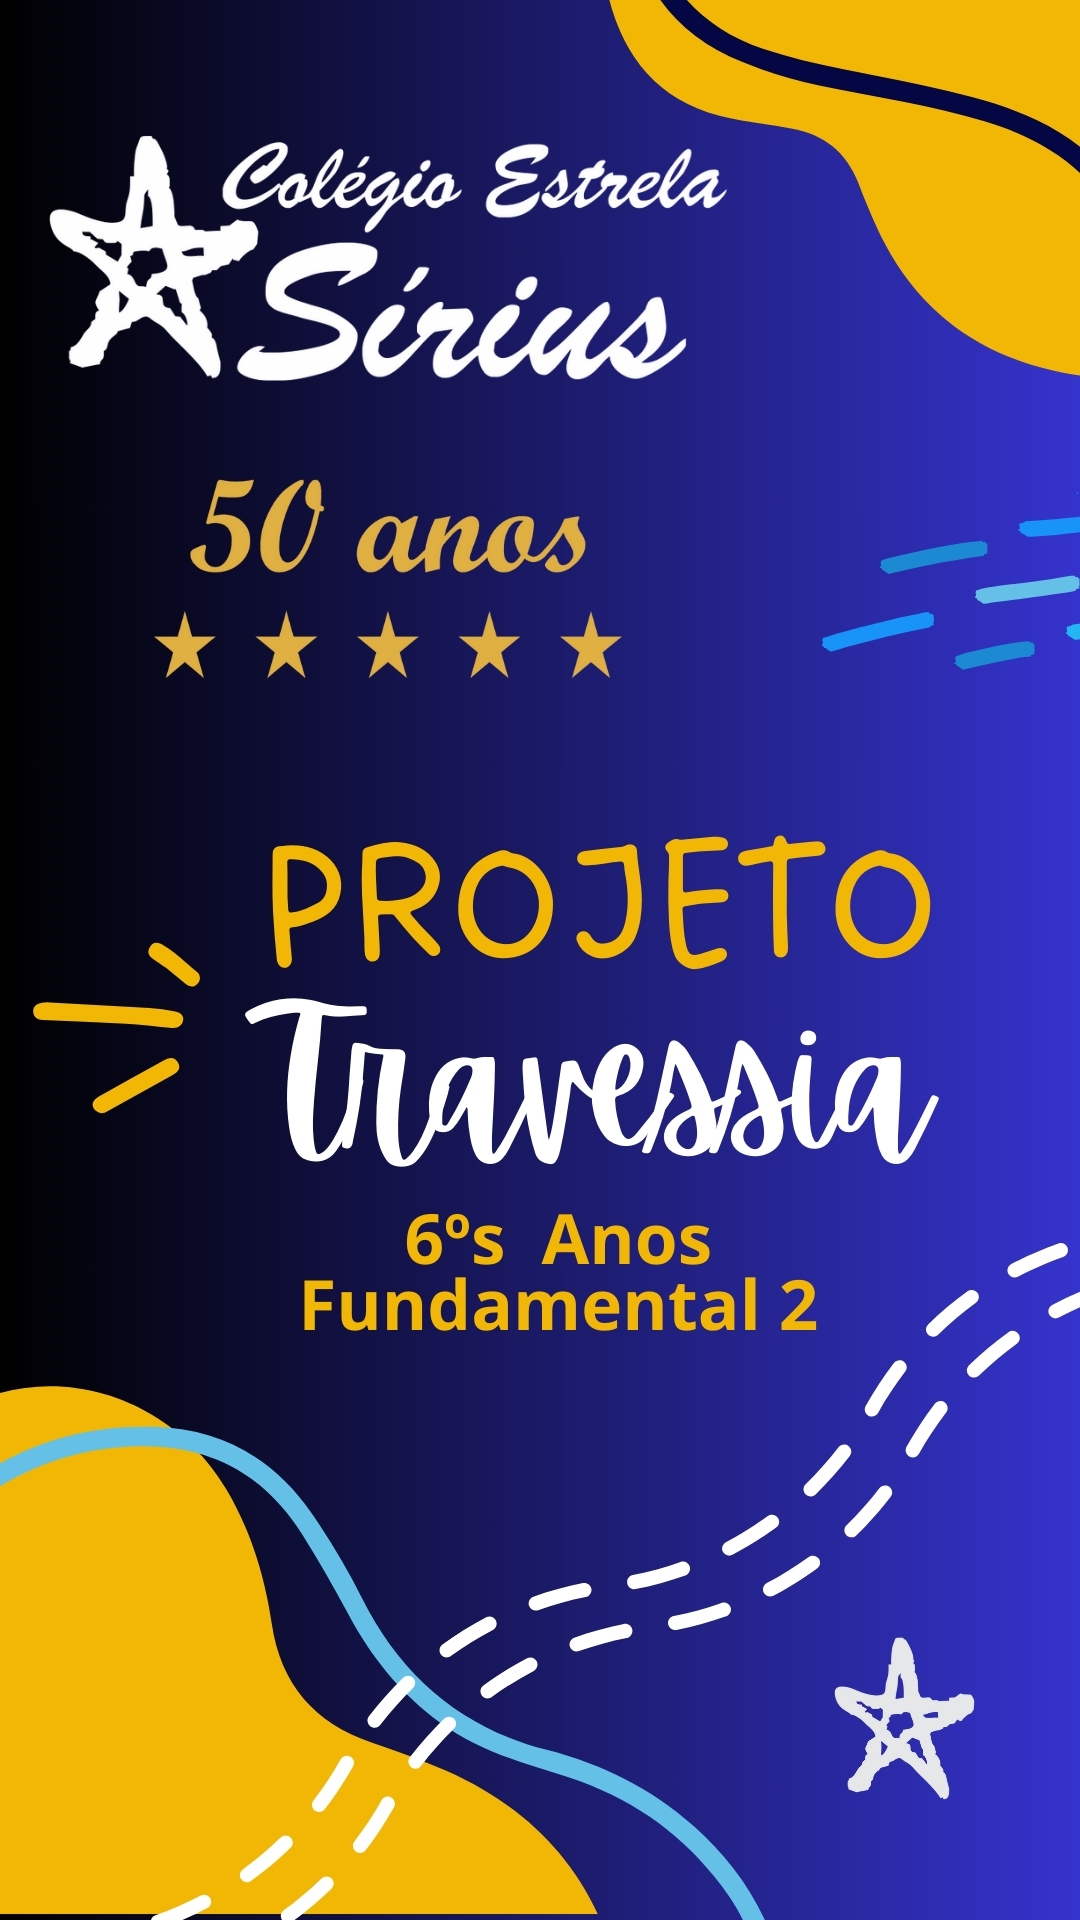 Projeto Travessia -  Fundamental 2 - Colgio Estrela Sirius. So Paulo, SP